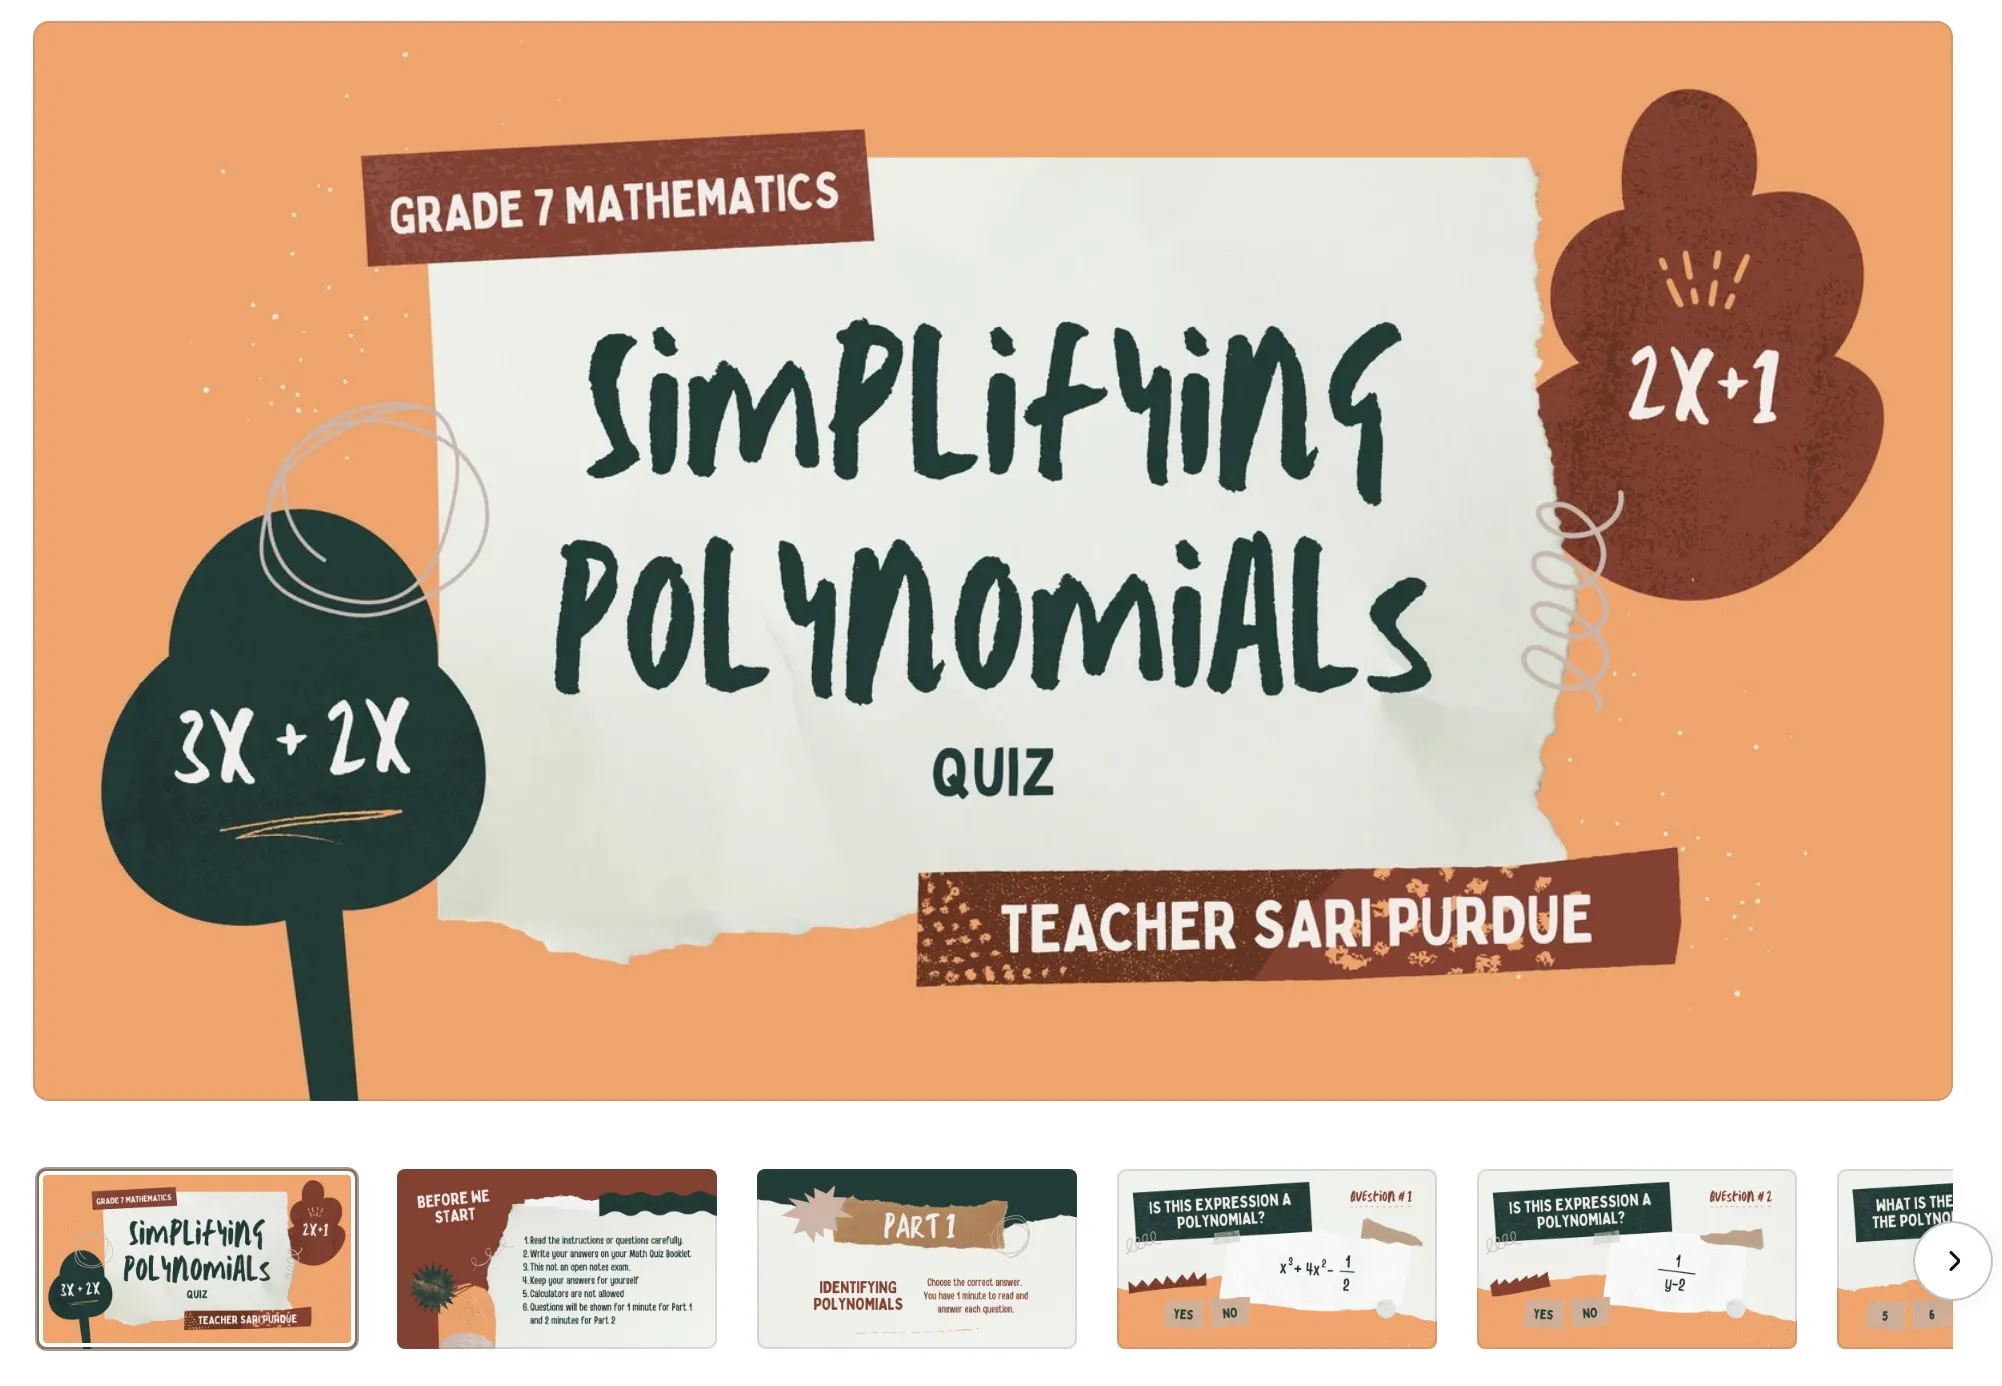 Grade 7 Mathematics simplifying polynomials Quiz Presentation Template